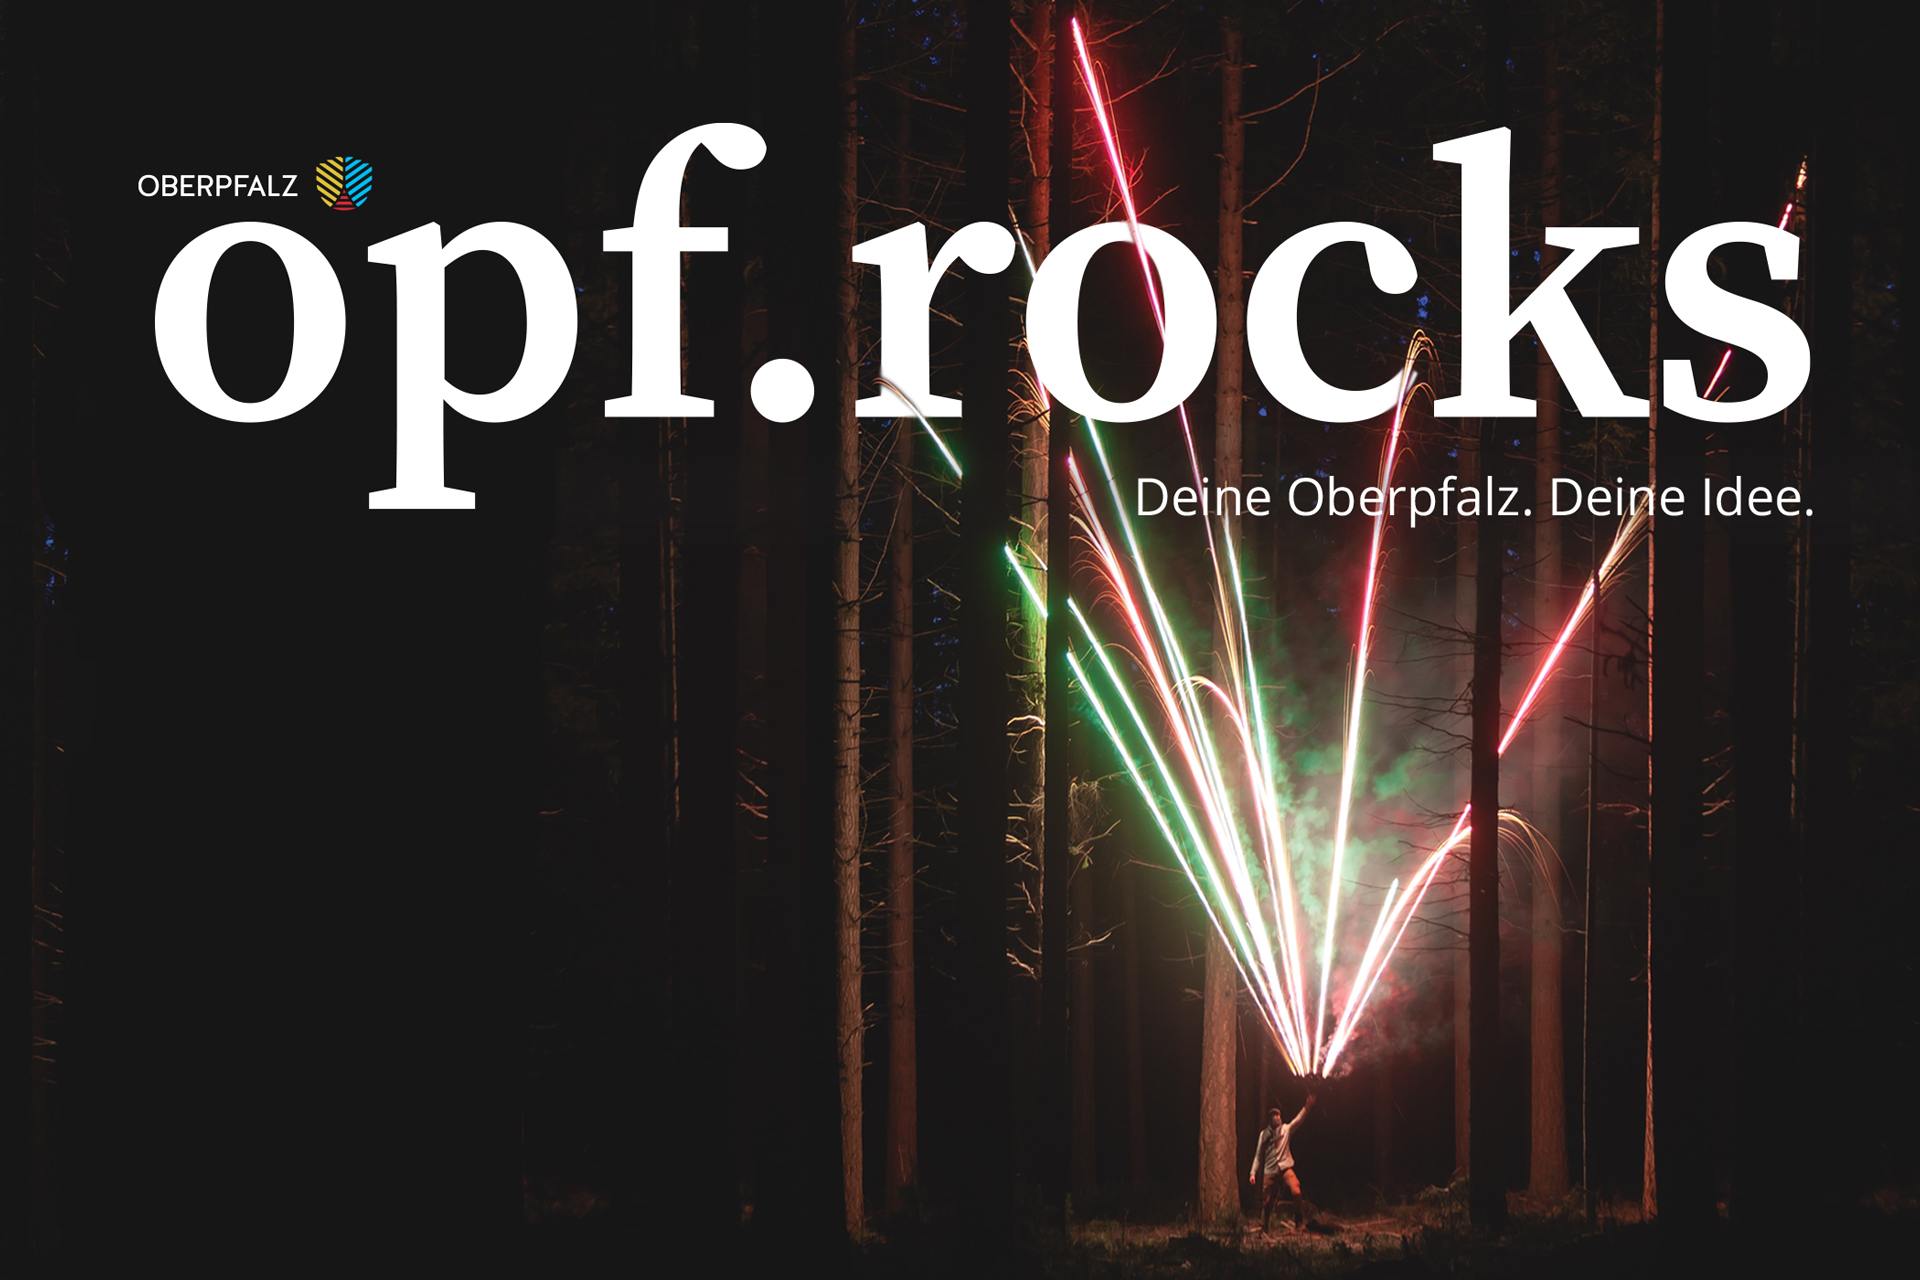 ideenwettbewerb-oberpfalz-marketing-opf.rocks-symbolbild.jpg